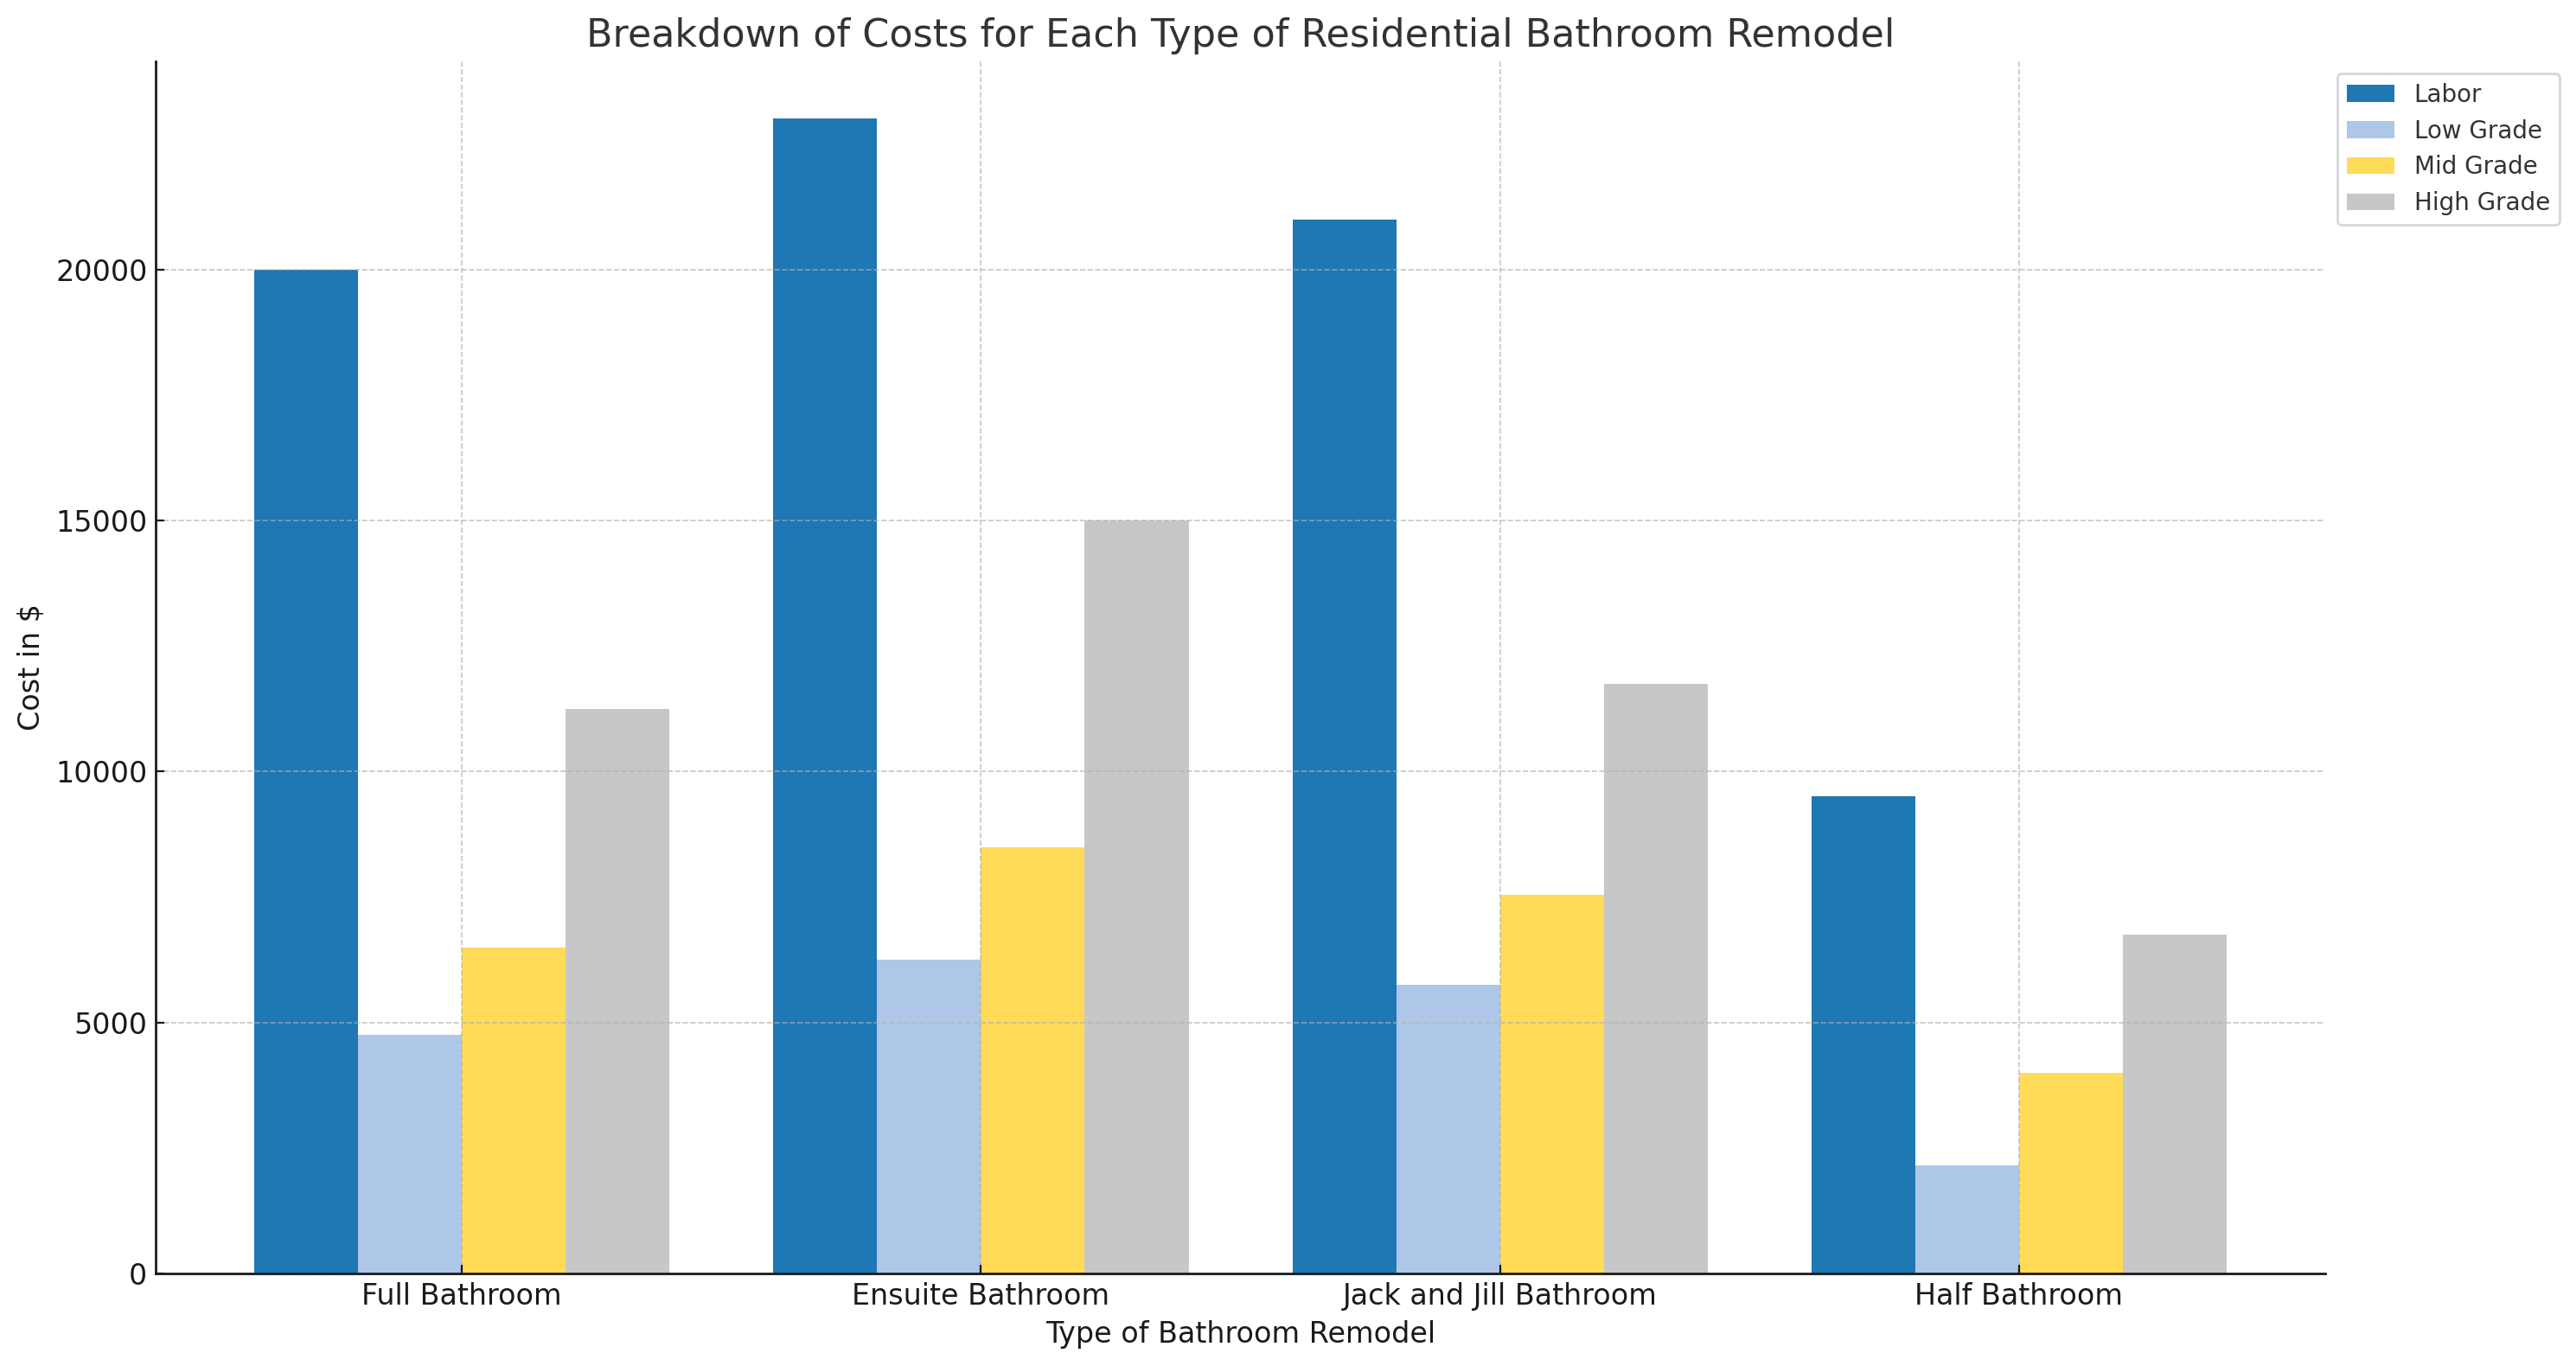 Breakdown of Costs for Each Type of Residential Bathroom Remodel in NYC